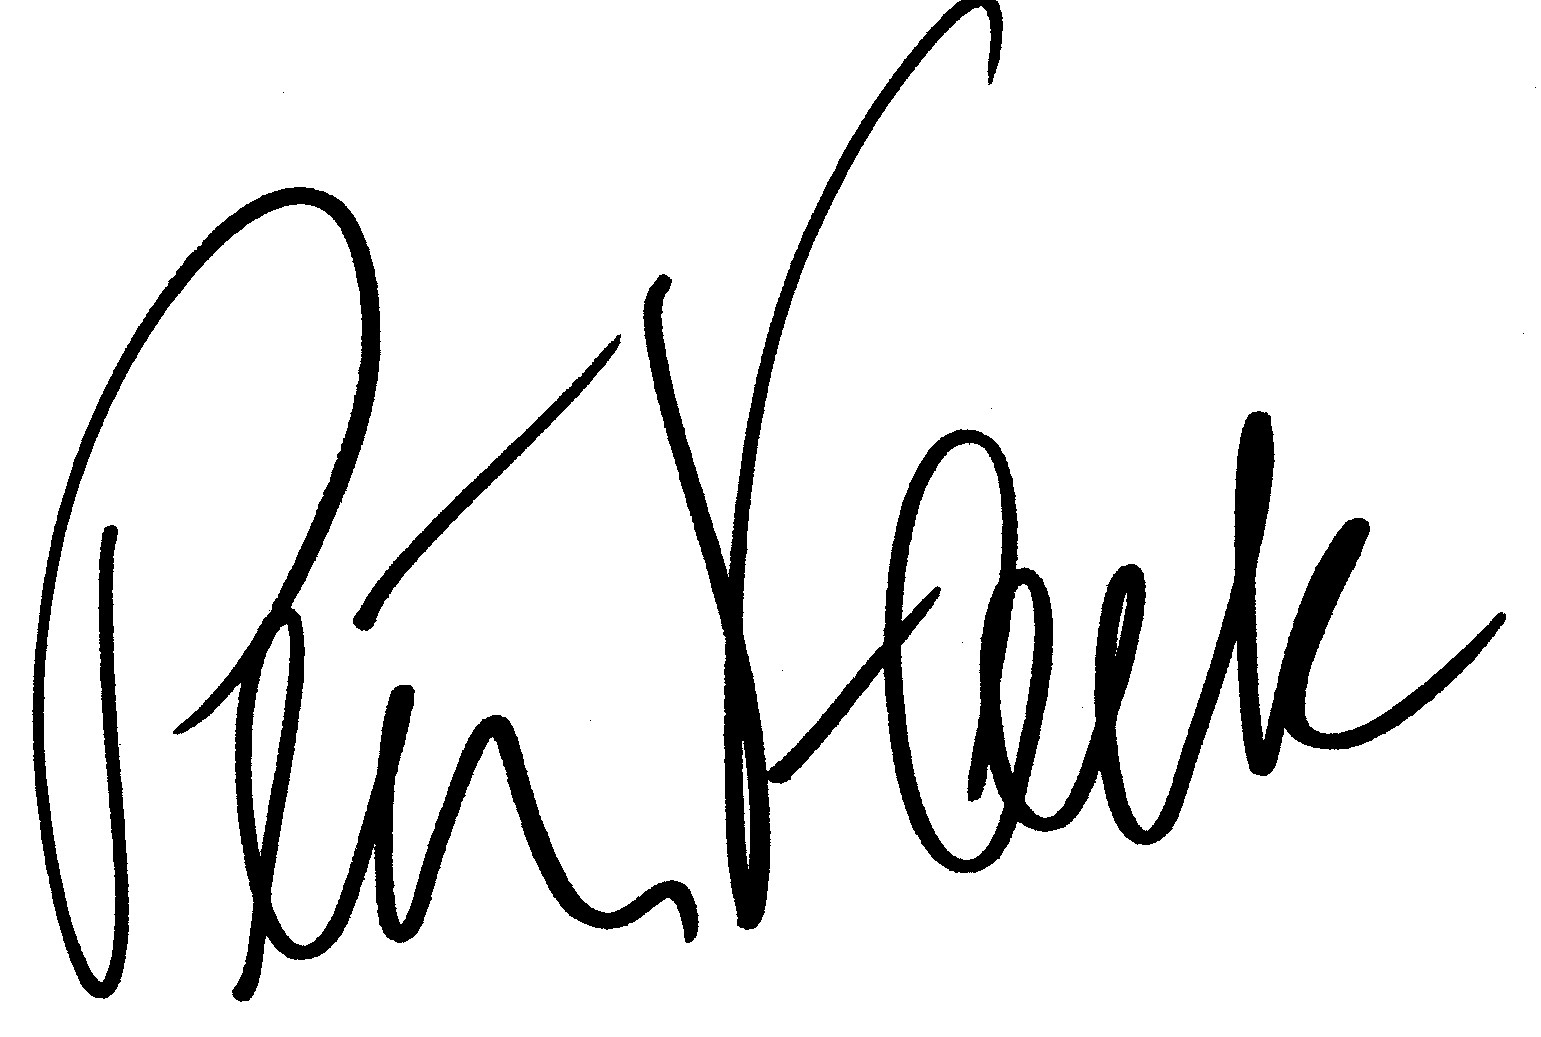 Peter Falk autograph facsimile